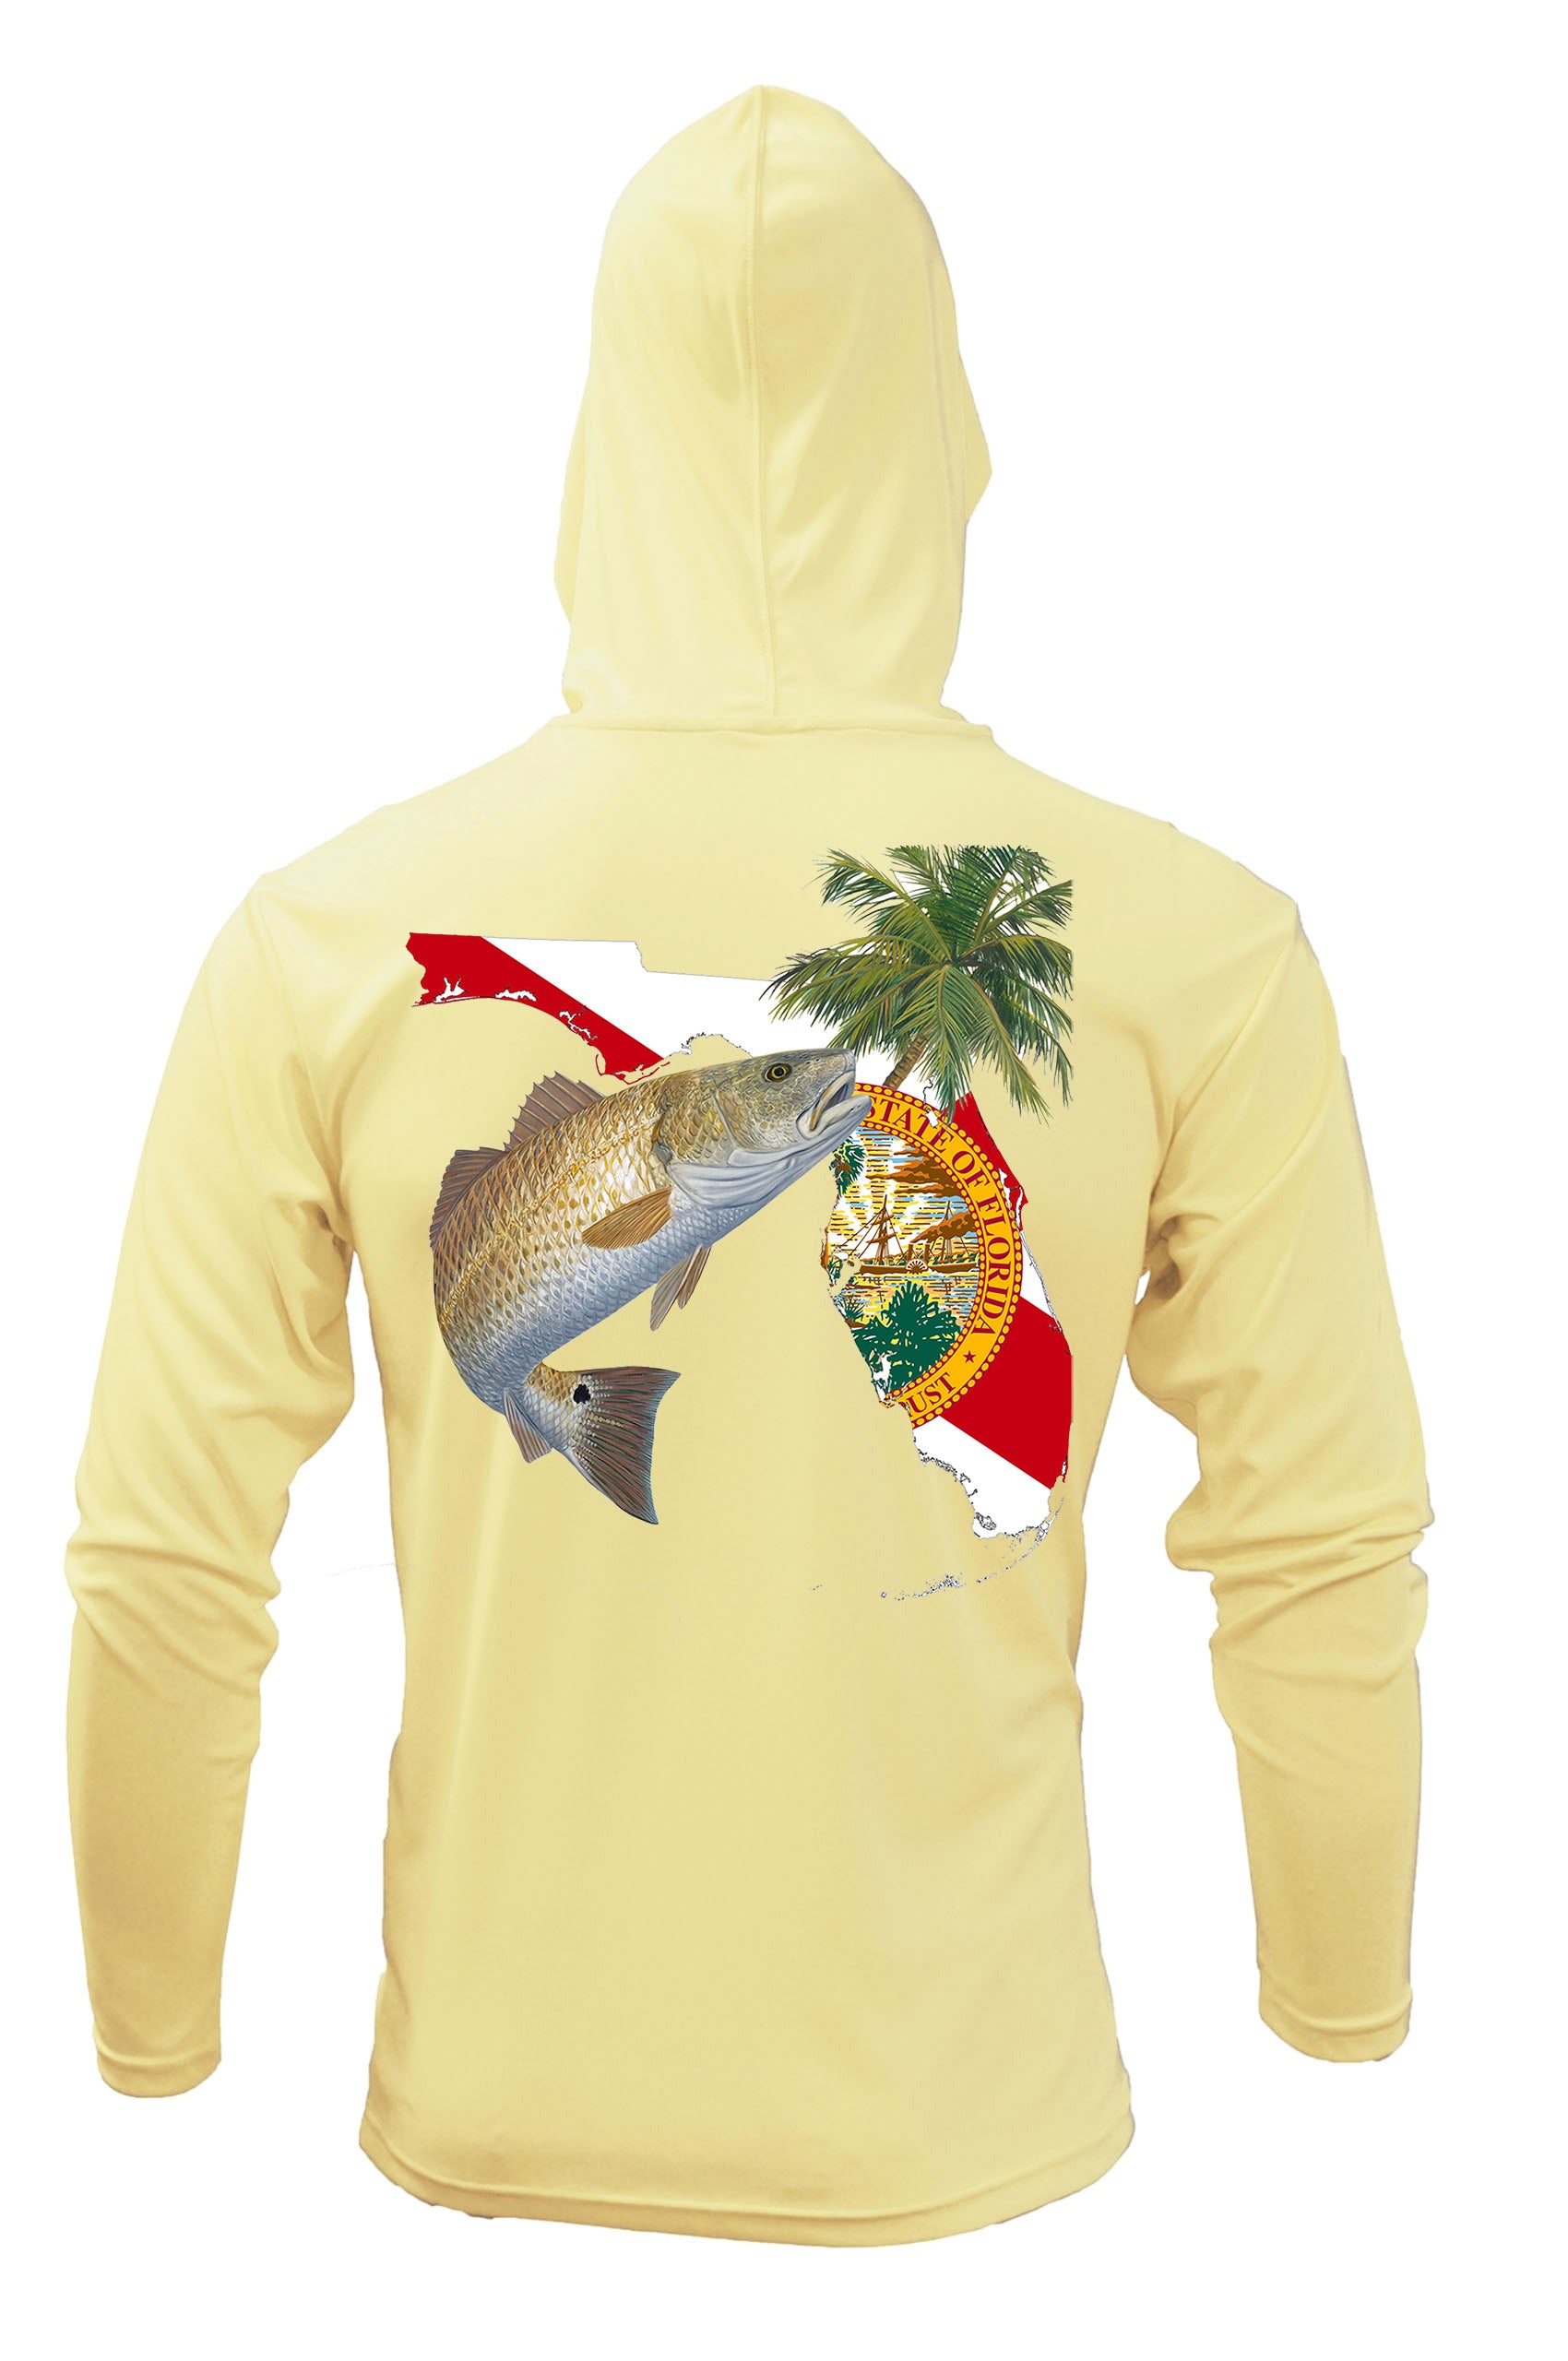 Hoodie Redfish Florida Fishing Shirt optional Florida Flag Sleeve